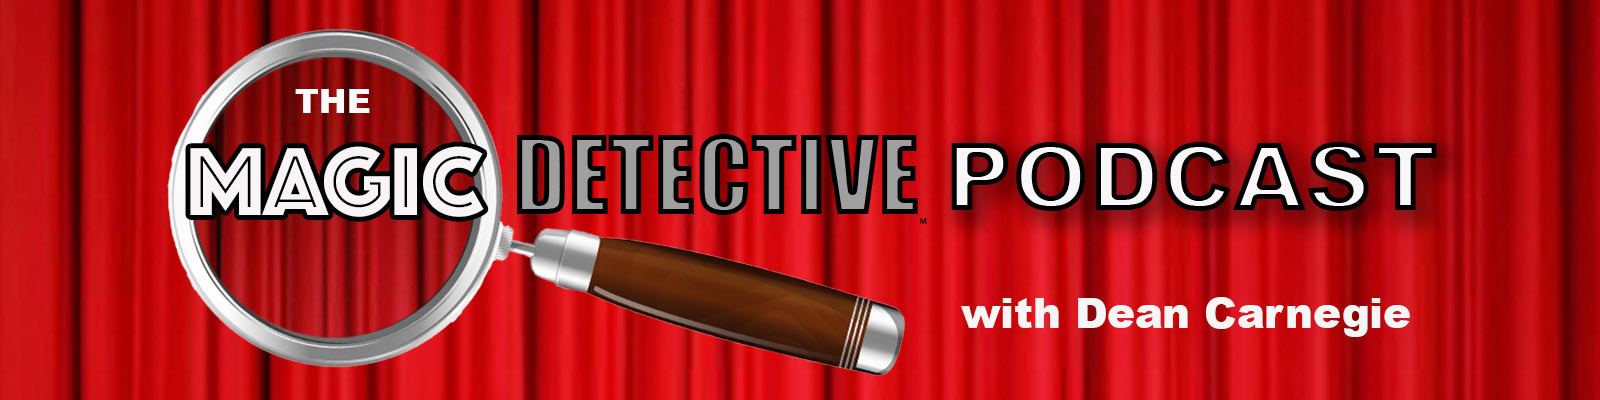 The Magic Detective Podcast